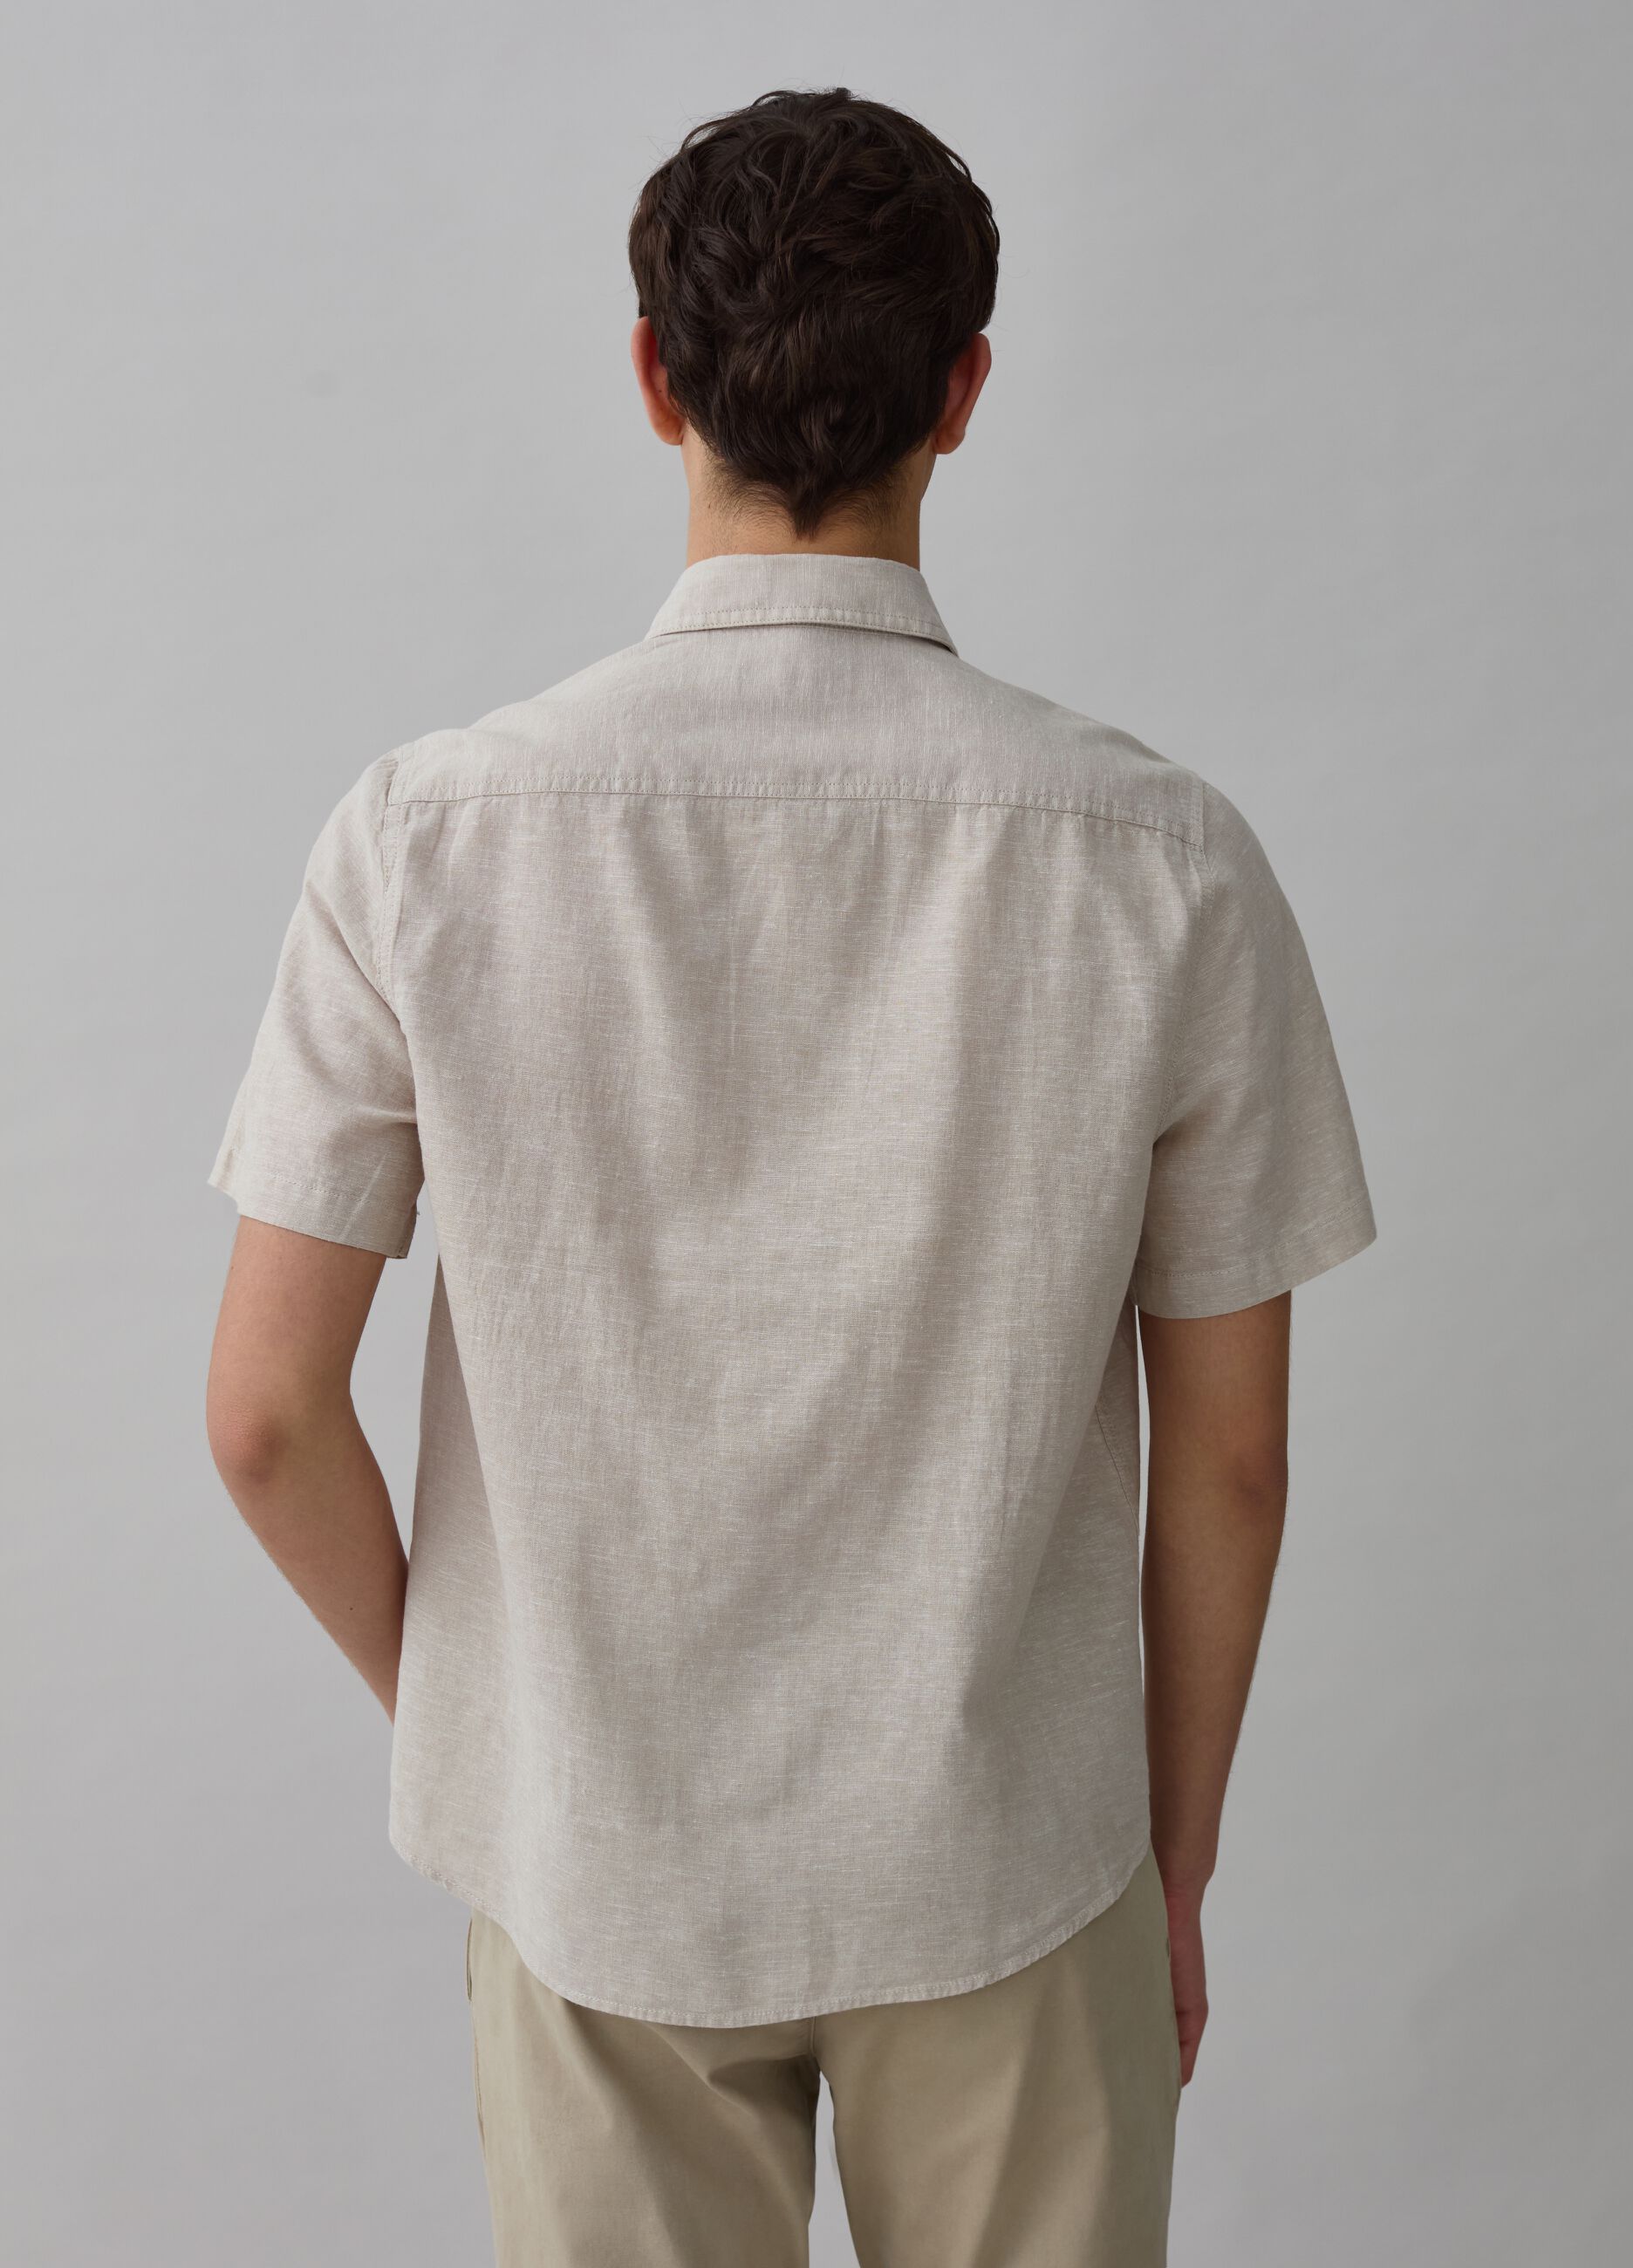 Linen and cotton short-sleeved shirt